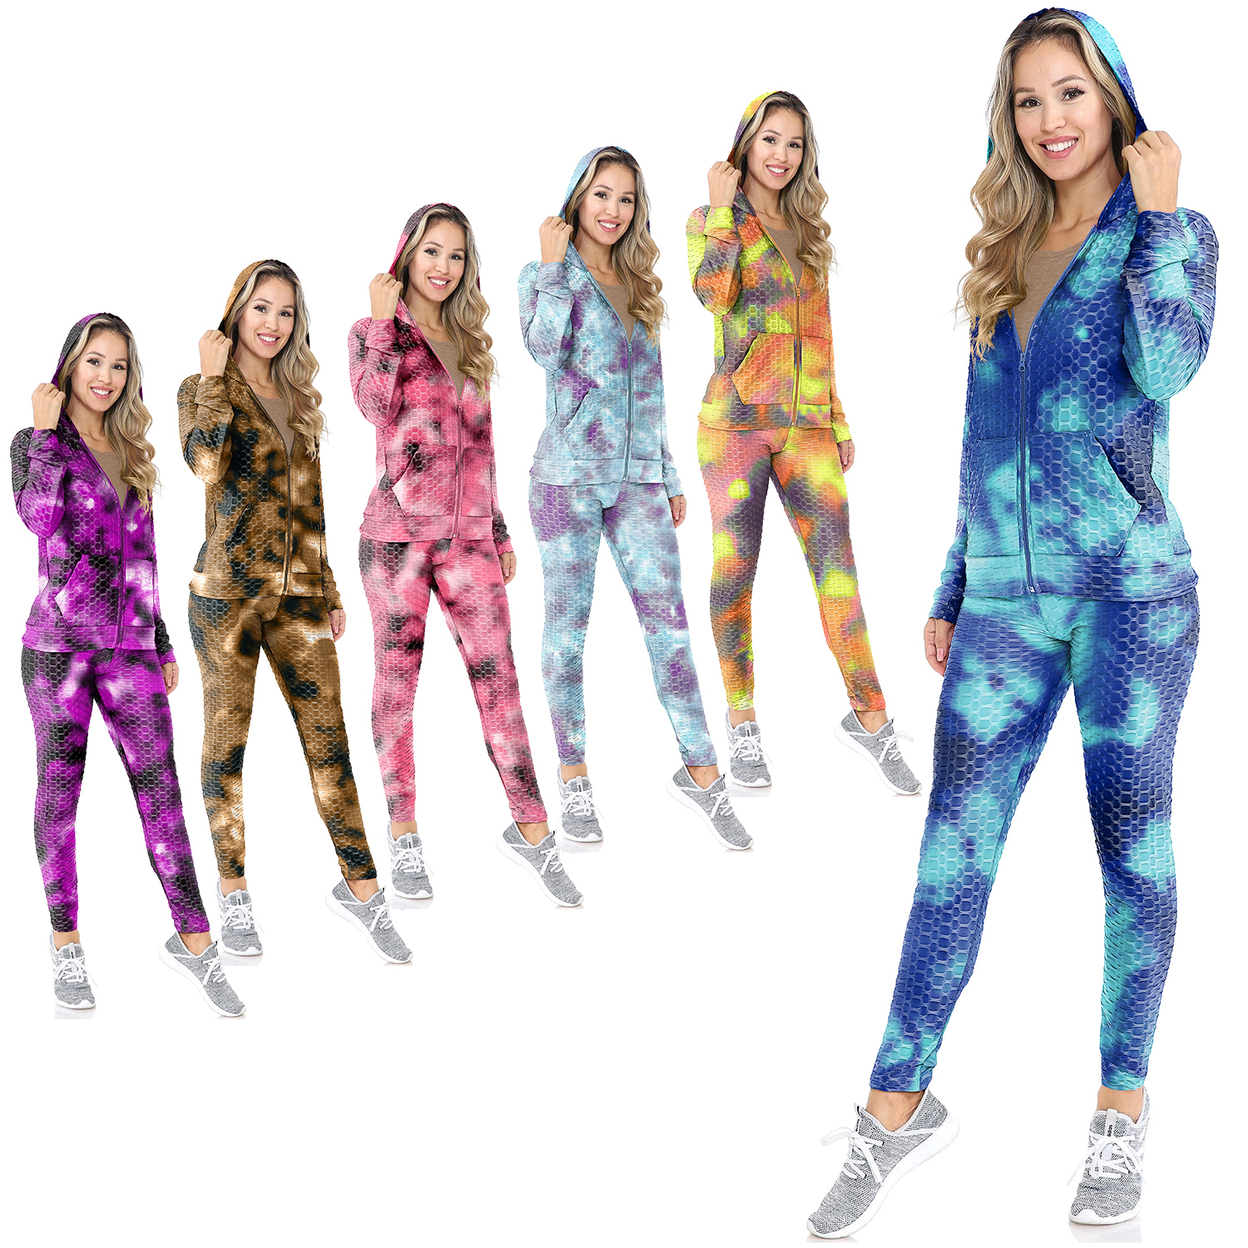 2-Piece: Women's Athletic Anti-Cellulite Textured Tie Dye Body Contour Yoga Track Suit W/ Hood - Small, Tie Dye